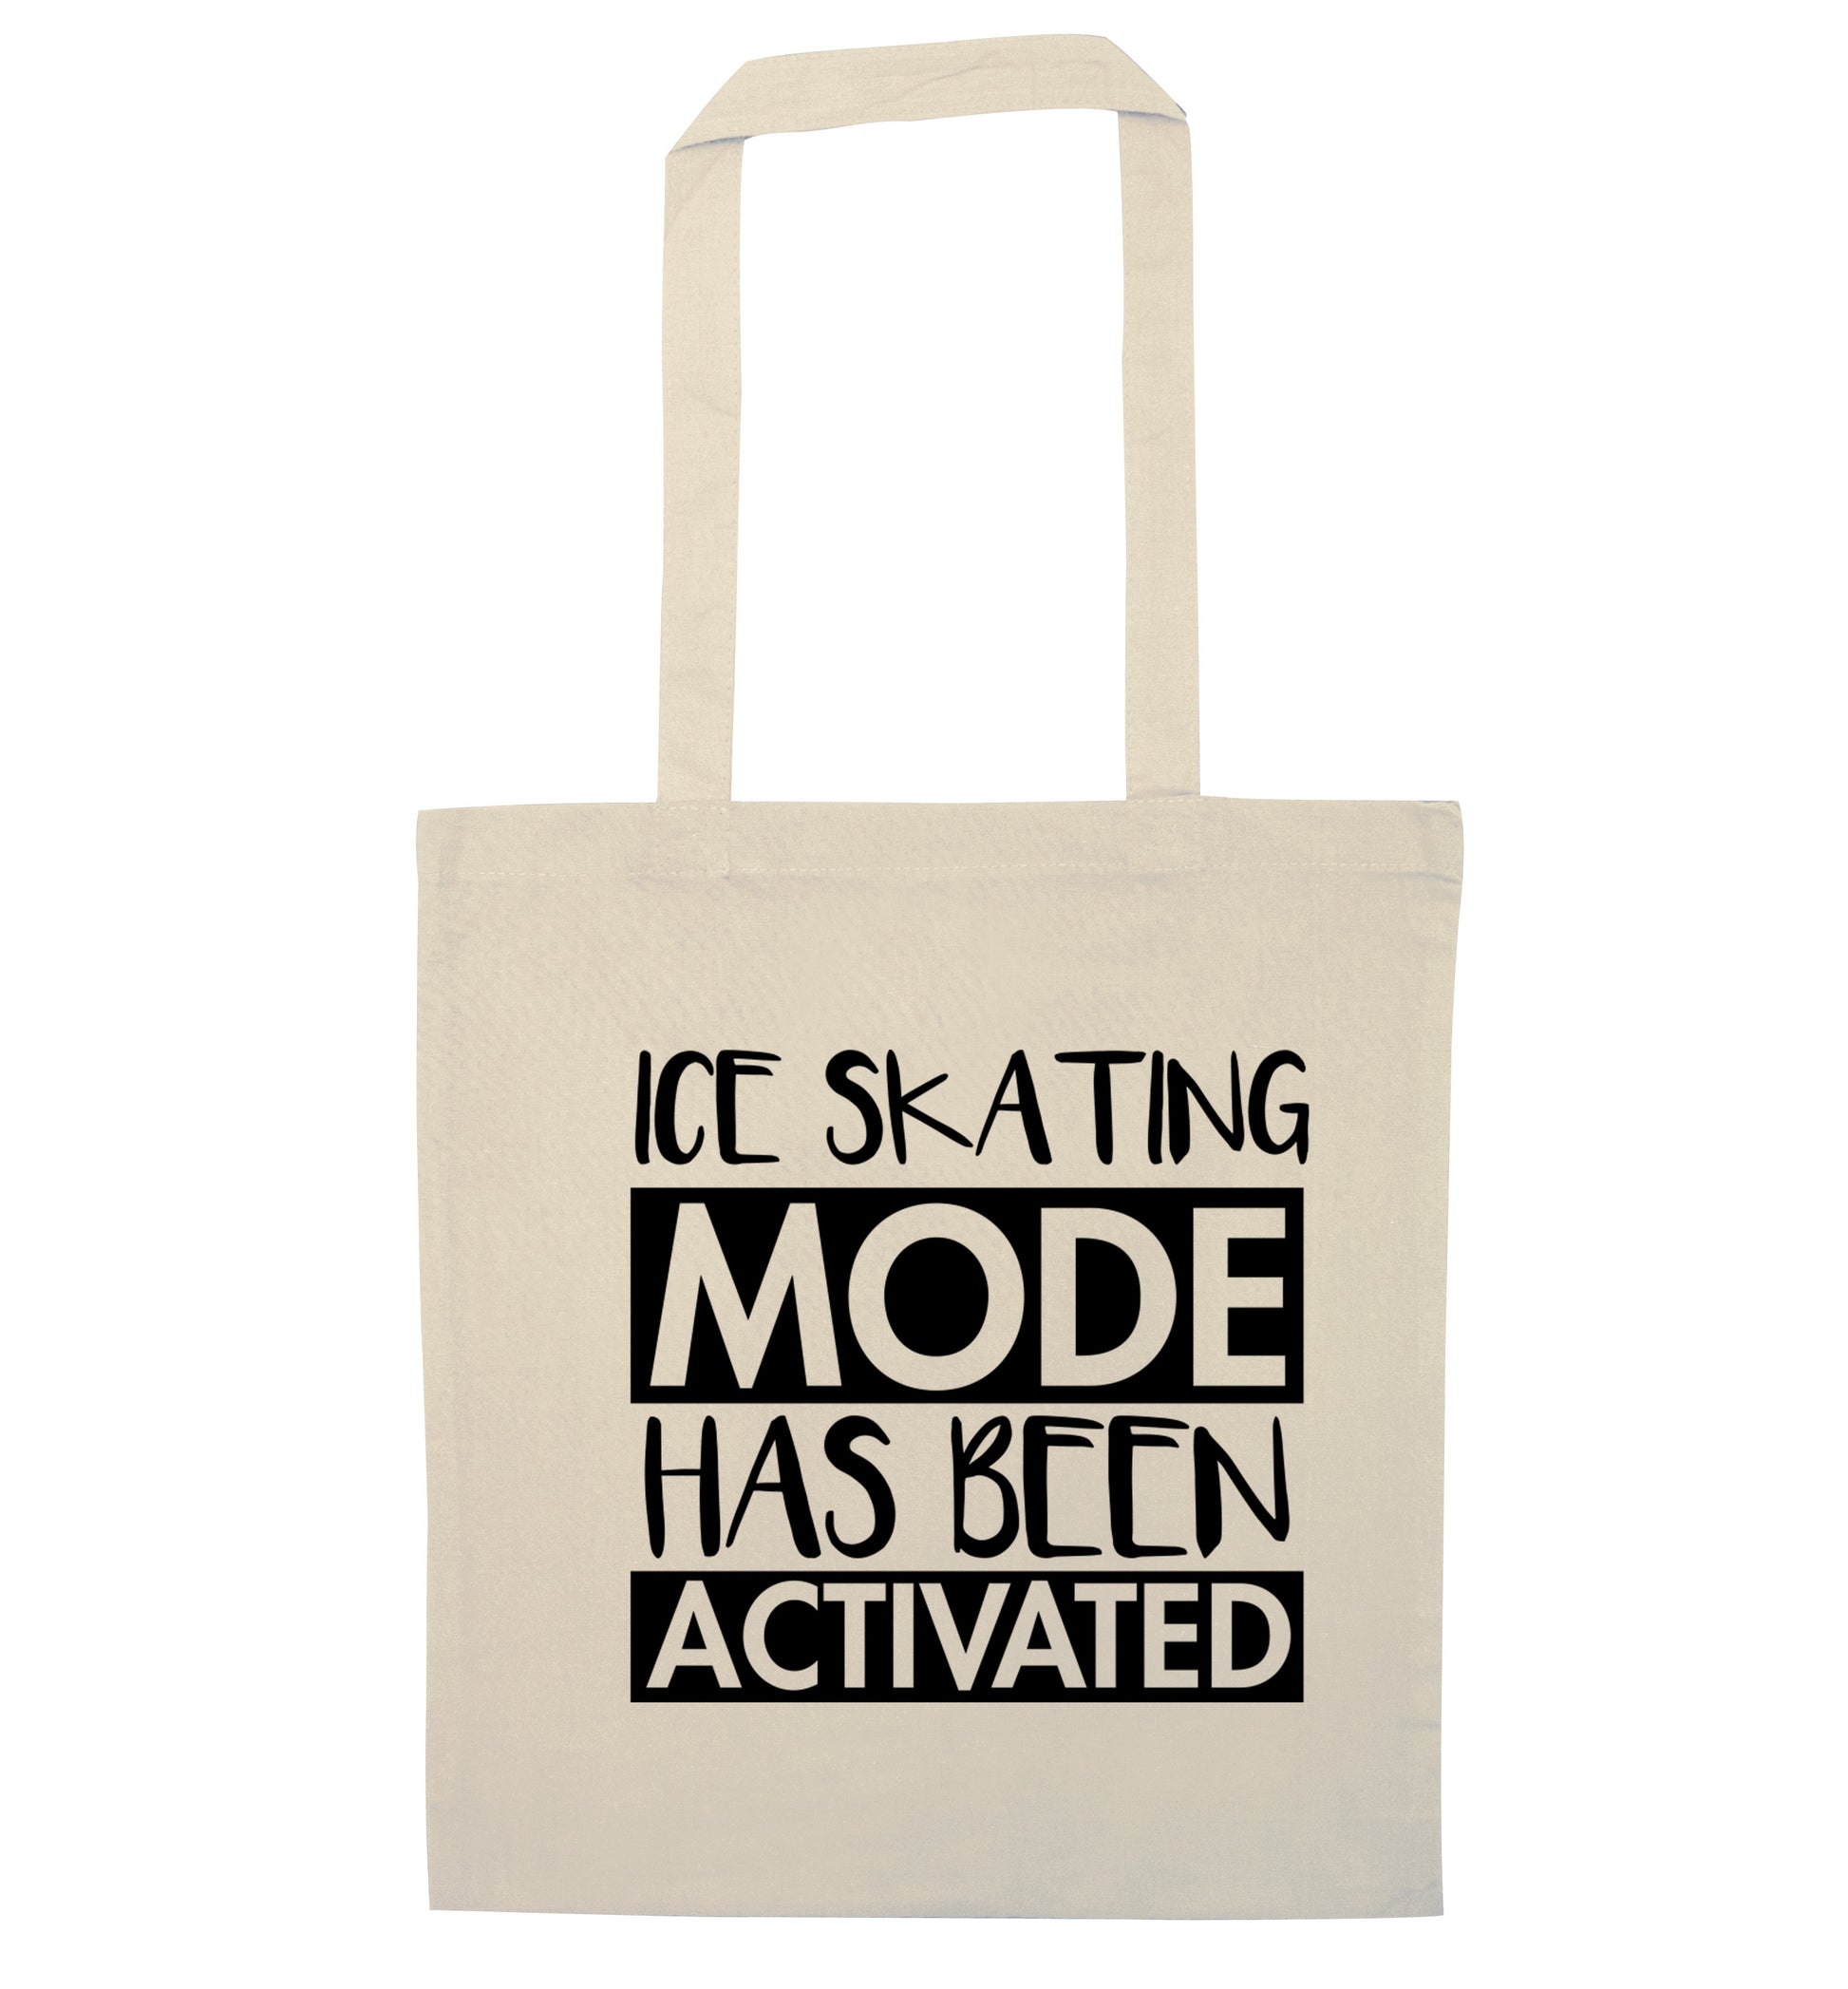 Ice skating mode activated natural tote bag